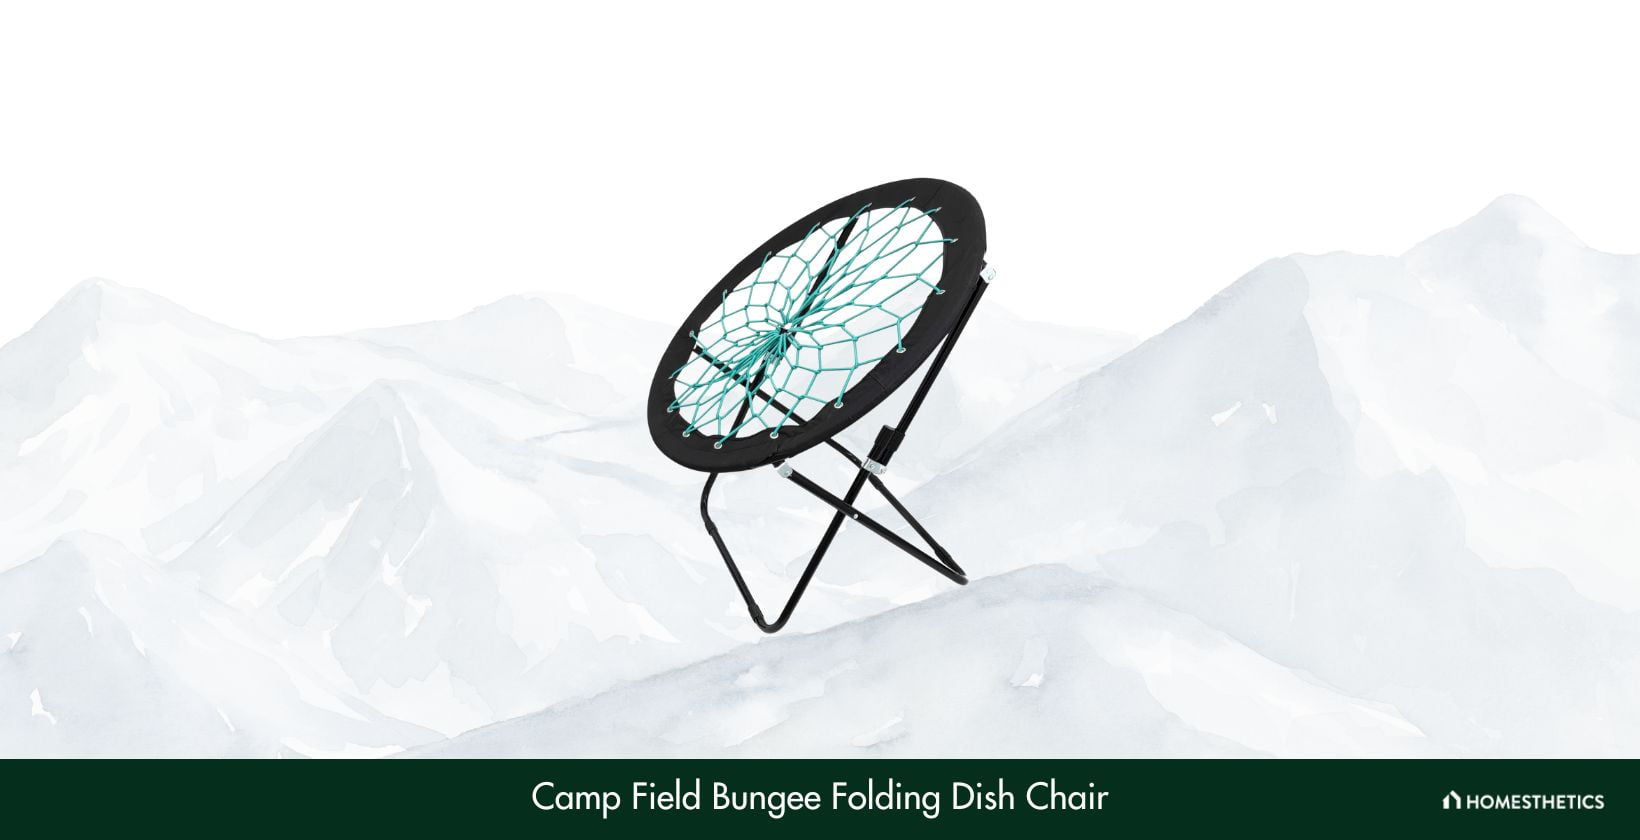 Camp Field Bungee Folding Dish Chair